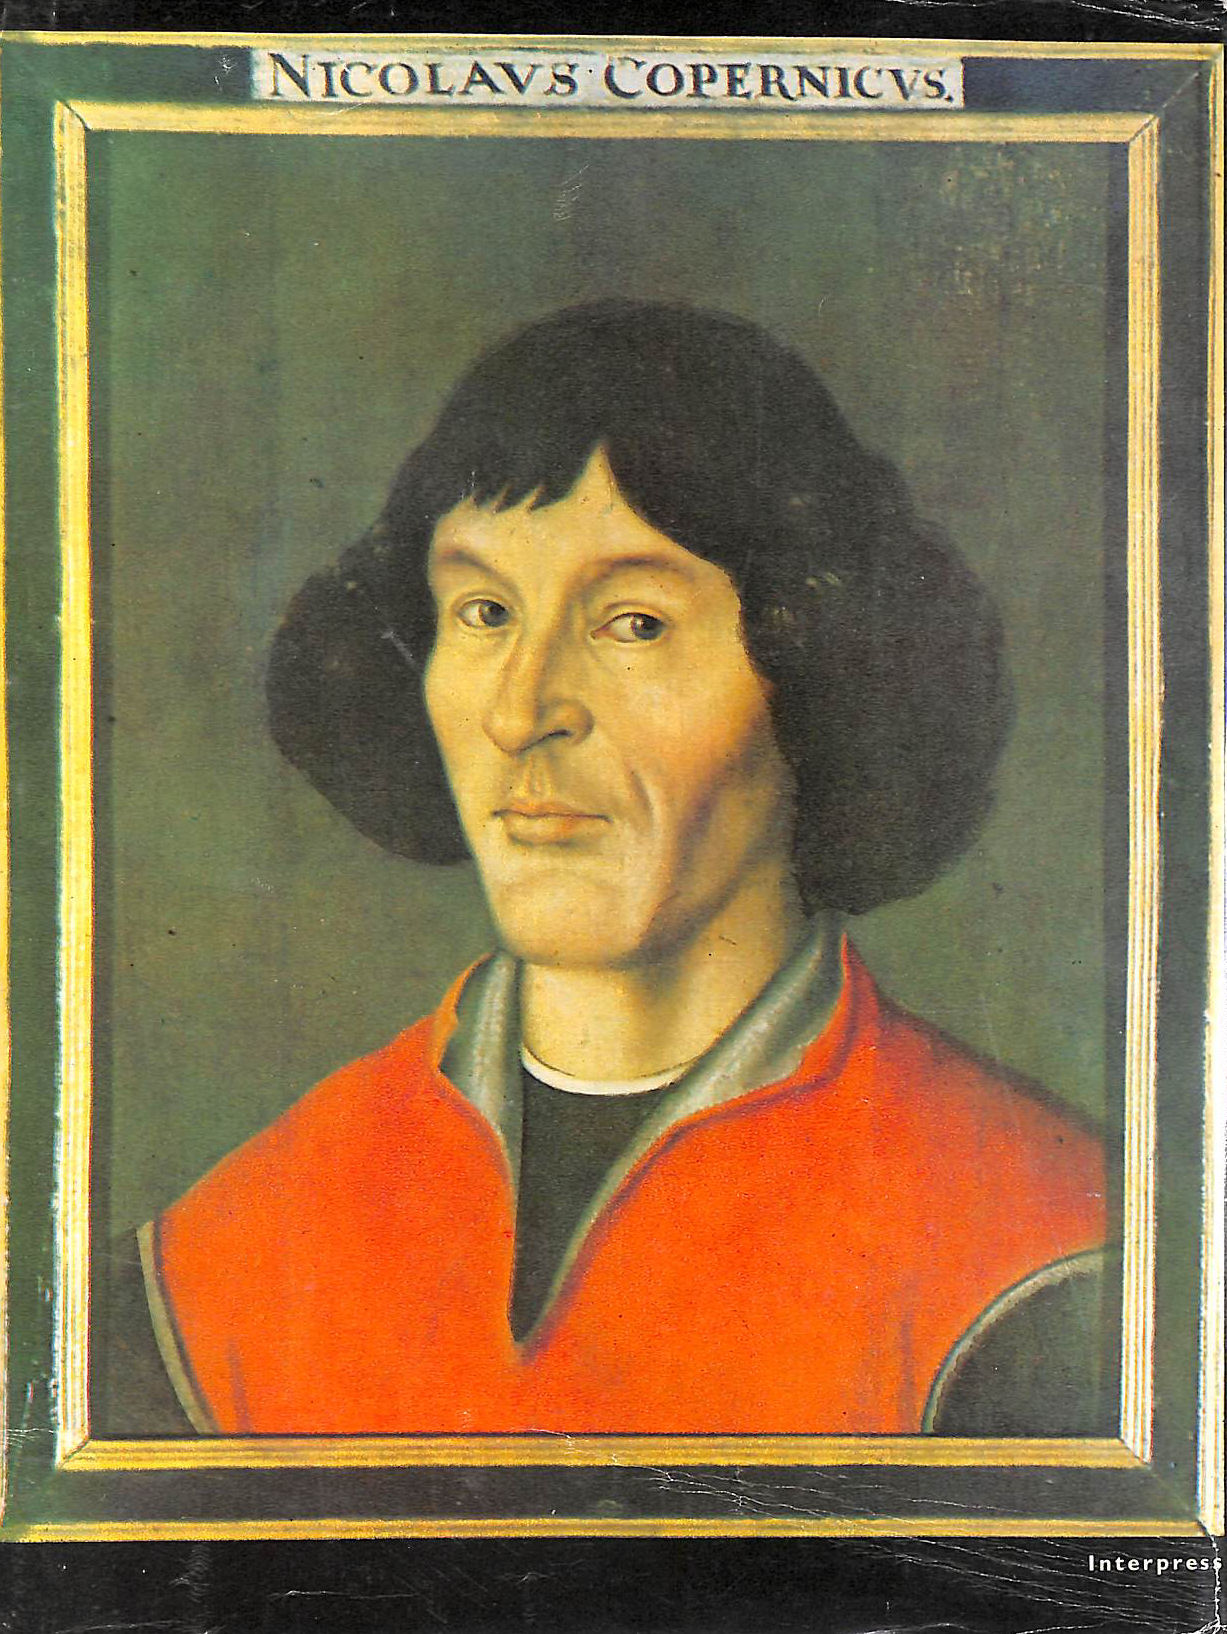 ADAMCZEWSKI, JAN. - Nicolaus Copernicus and His Epoch